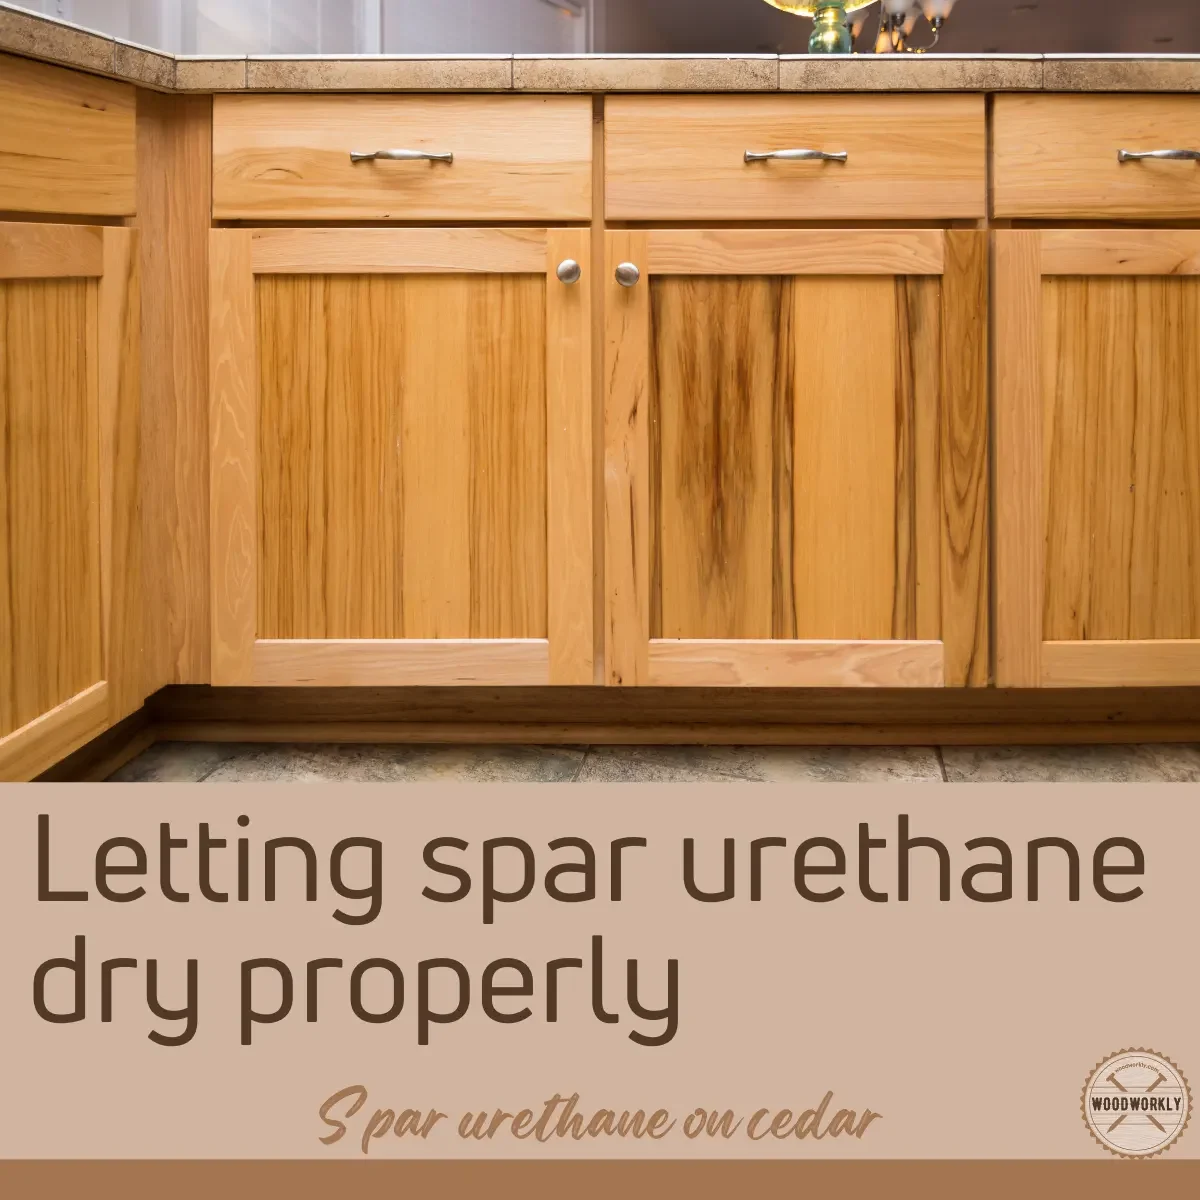 Letting spar urethane dry properly